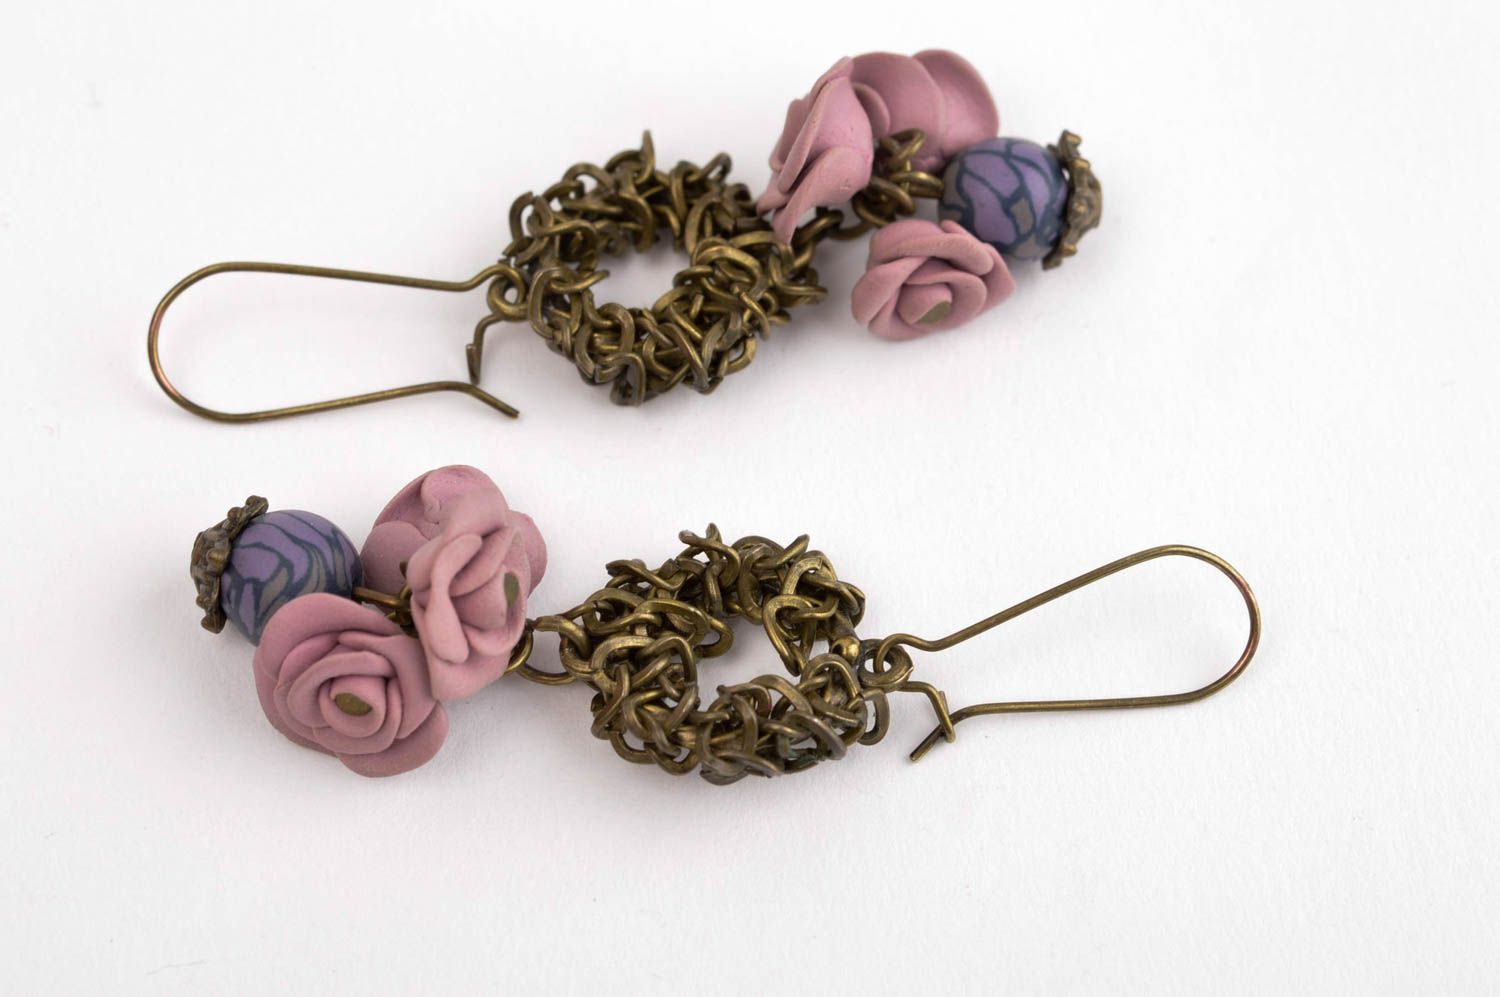 Handmade earrings designer accessory gift ideas clay earrings unusual jewelry photo 2